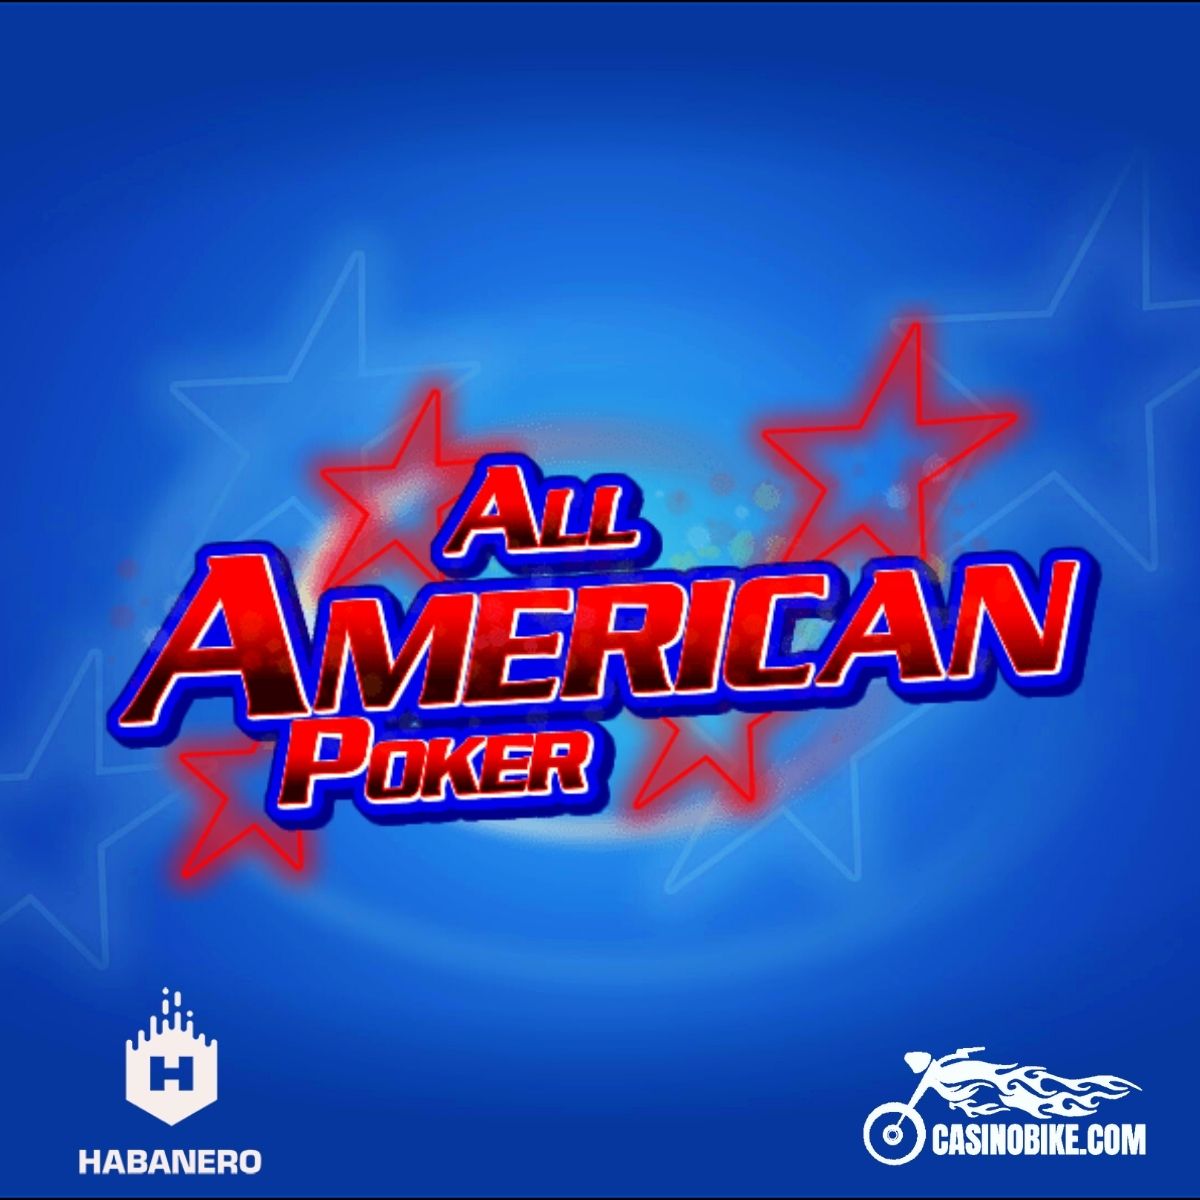 All American Poker by Habanero Logo